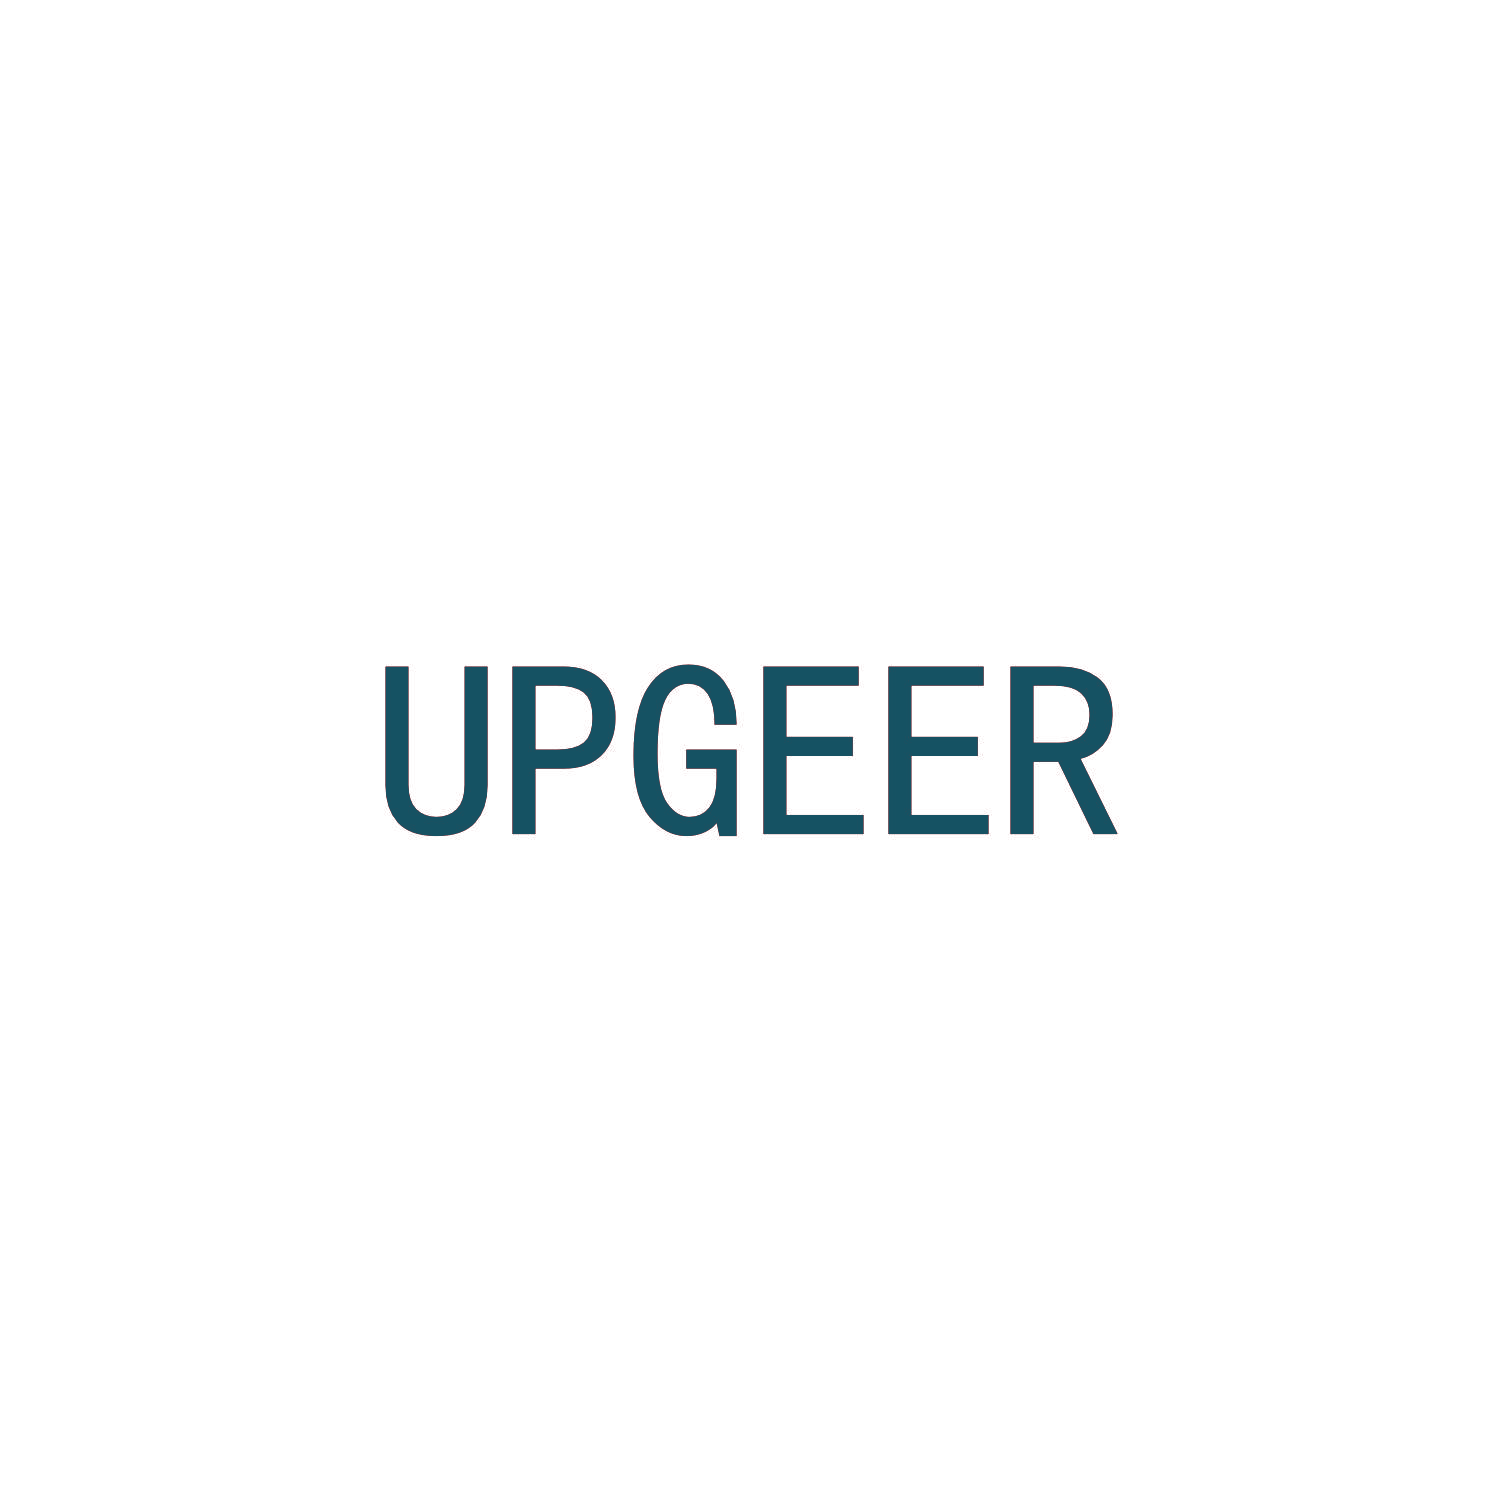 UPGEER